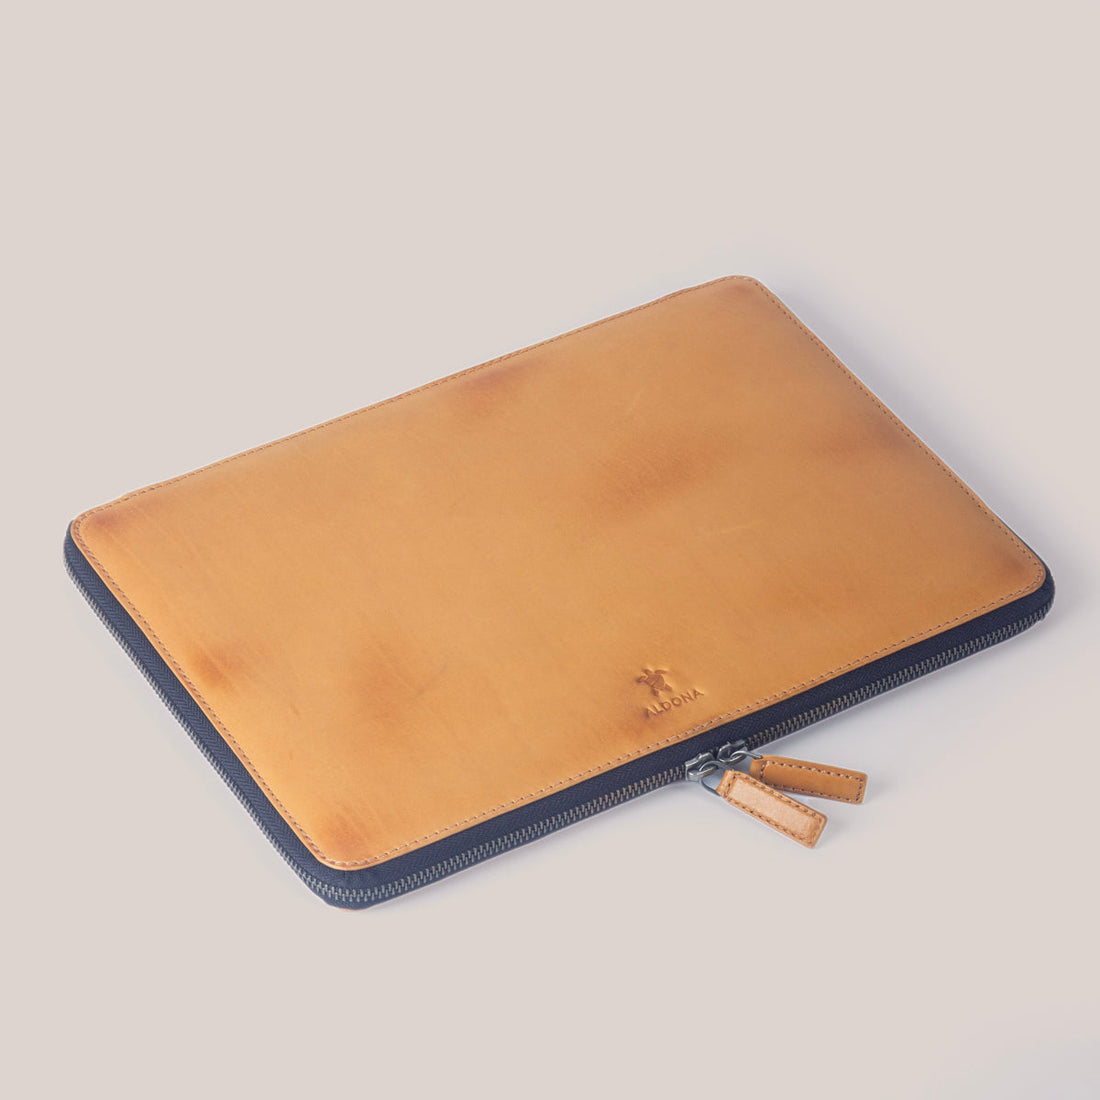 MacBook Air 15 Zippered Laptop Case - Onyx Black